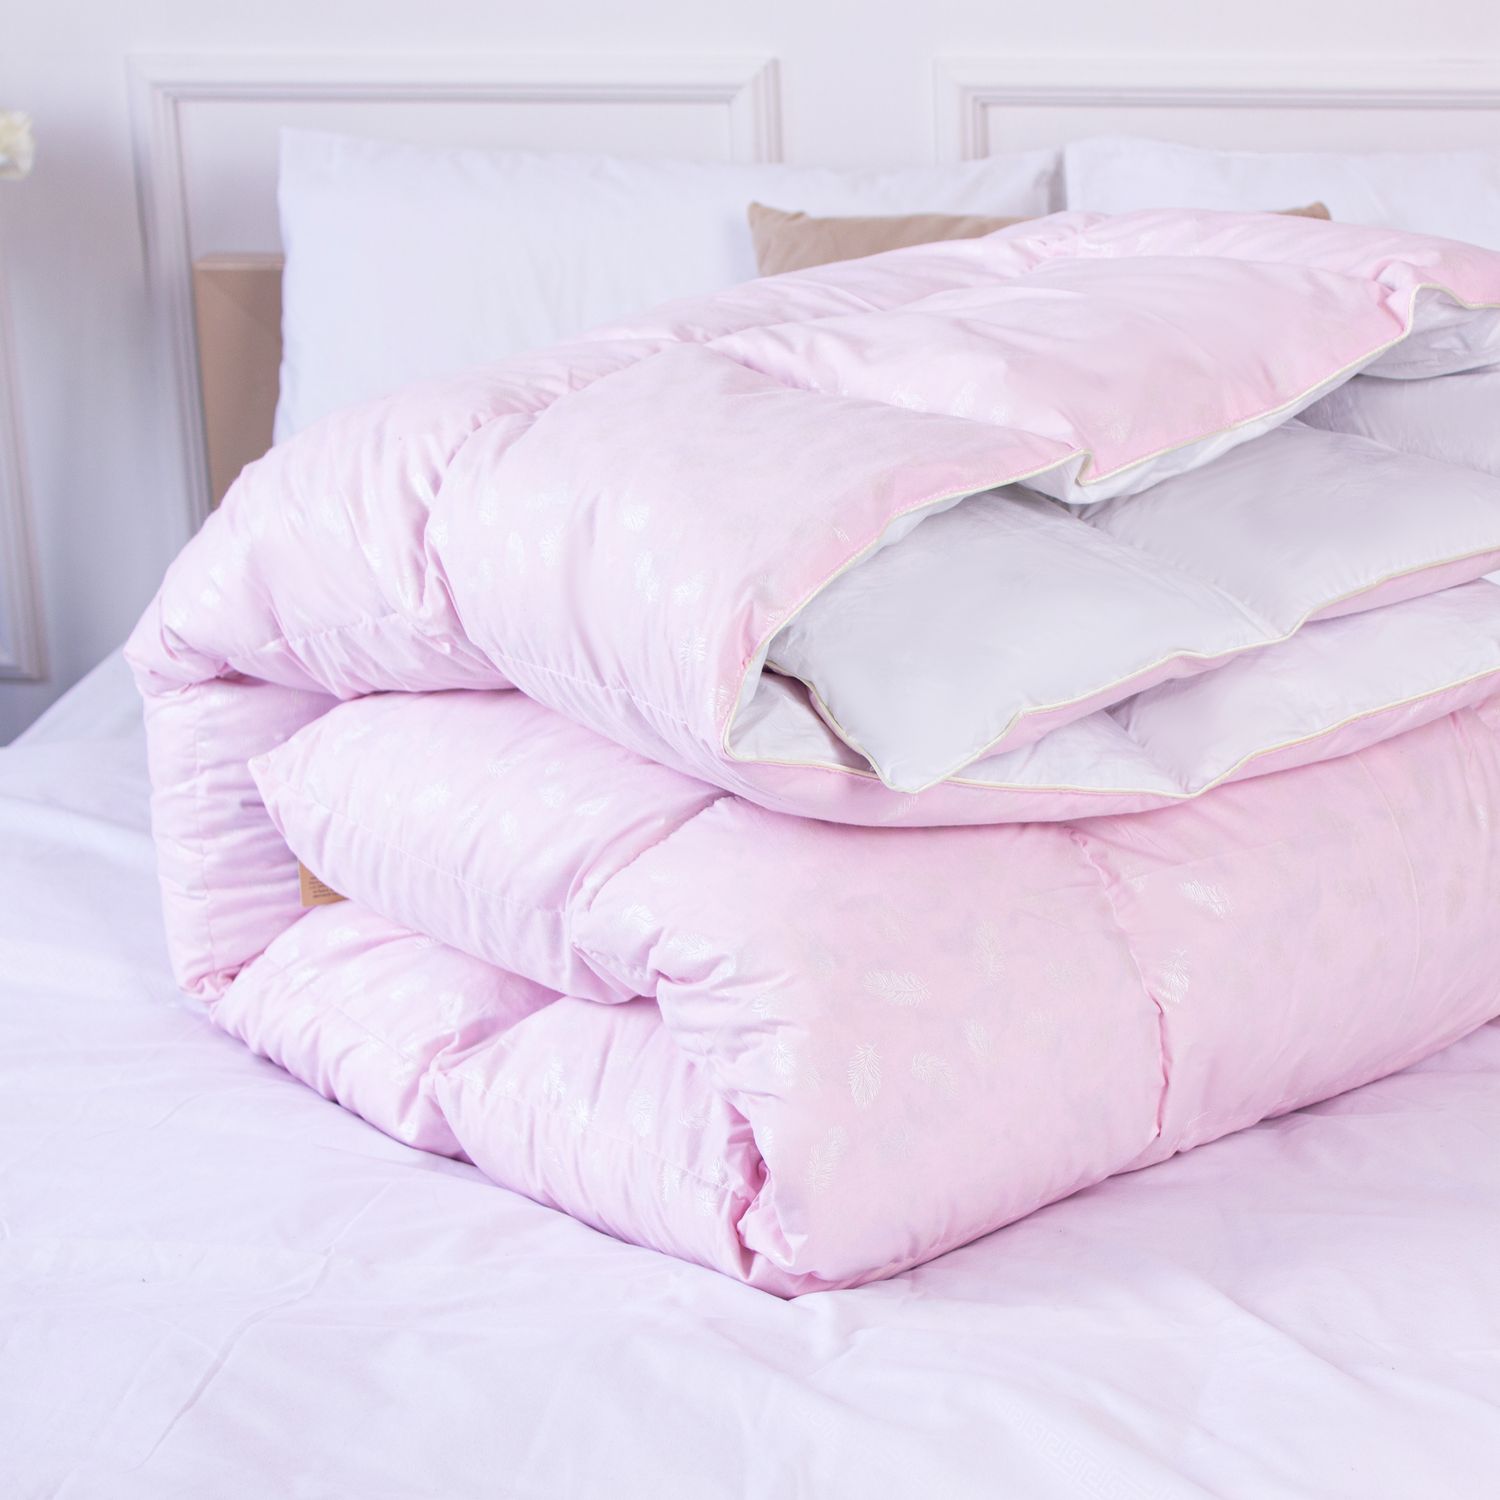 Одеяло пуховое MirSon Karmen №1859 Bio-Pink, 70% пух, полуторное, 215x155, розовое (2200003014600) - фото 3